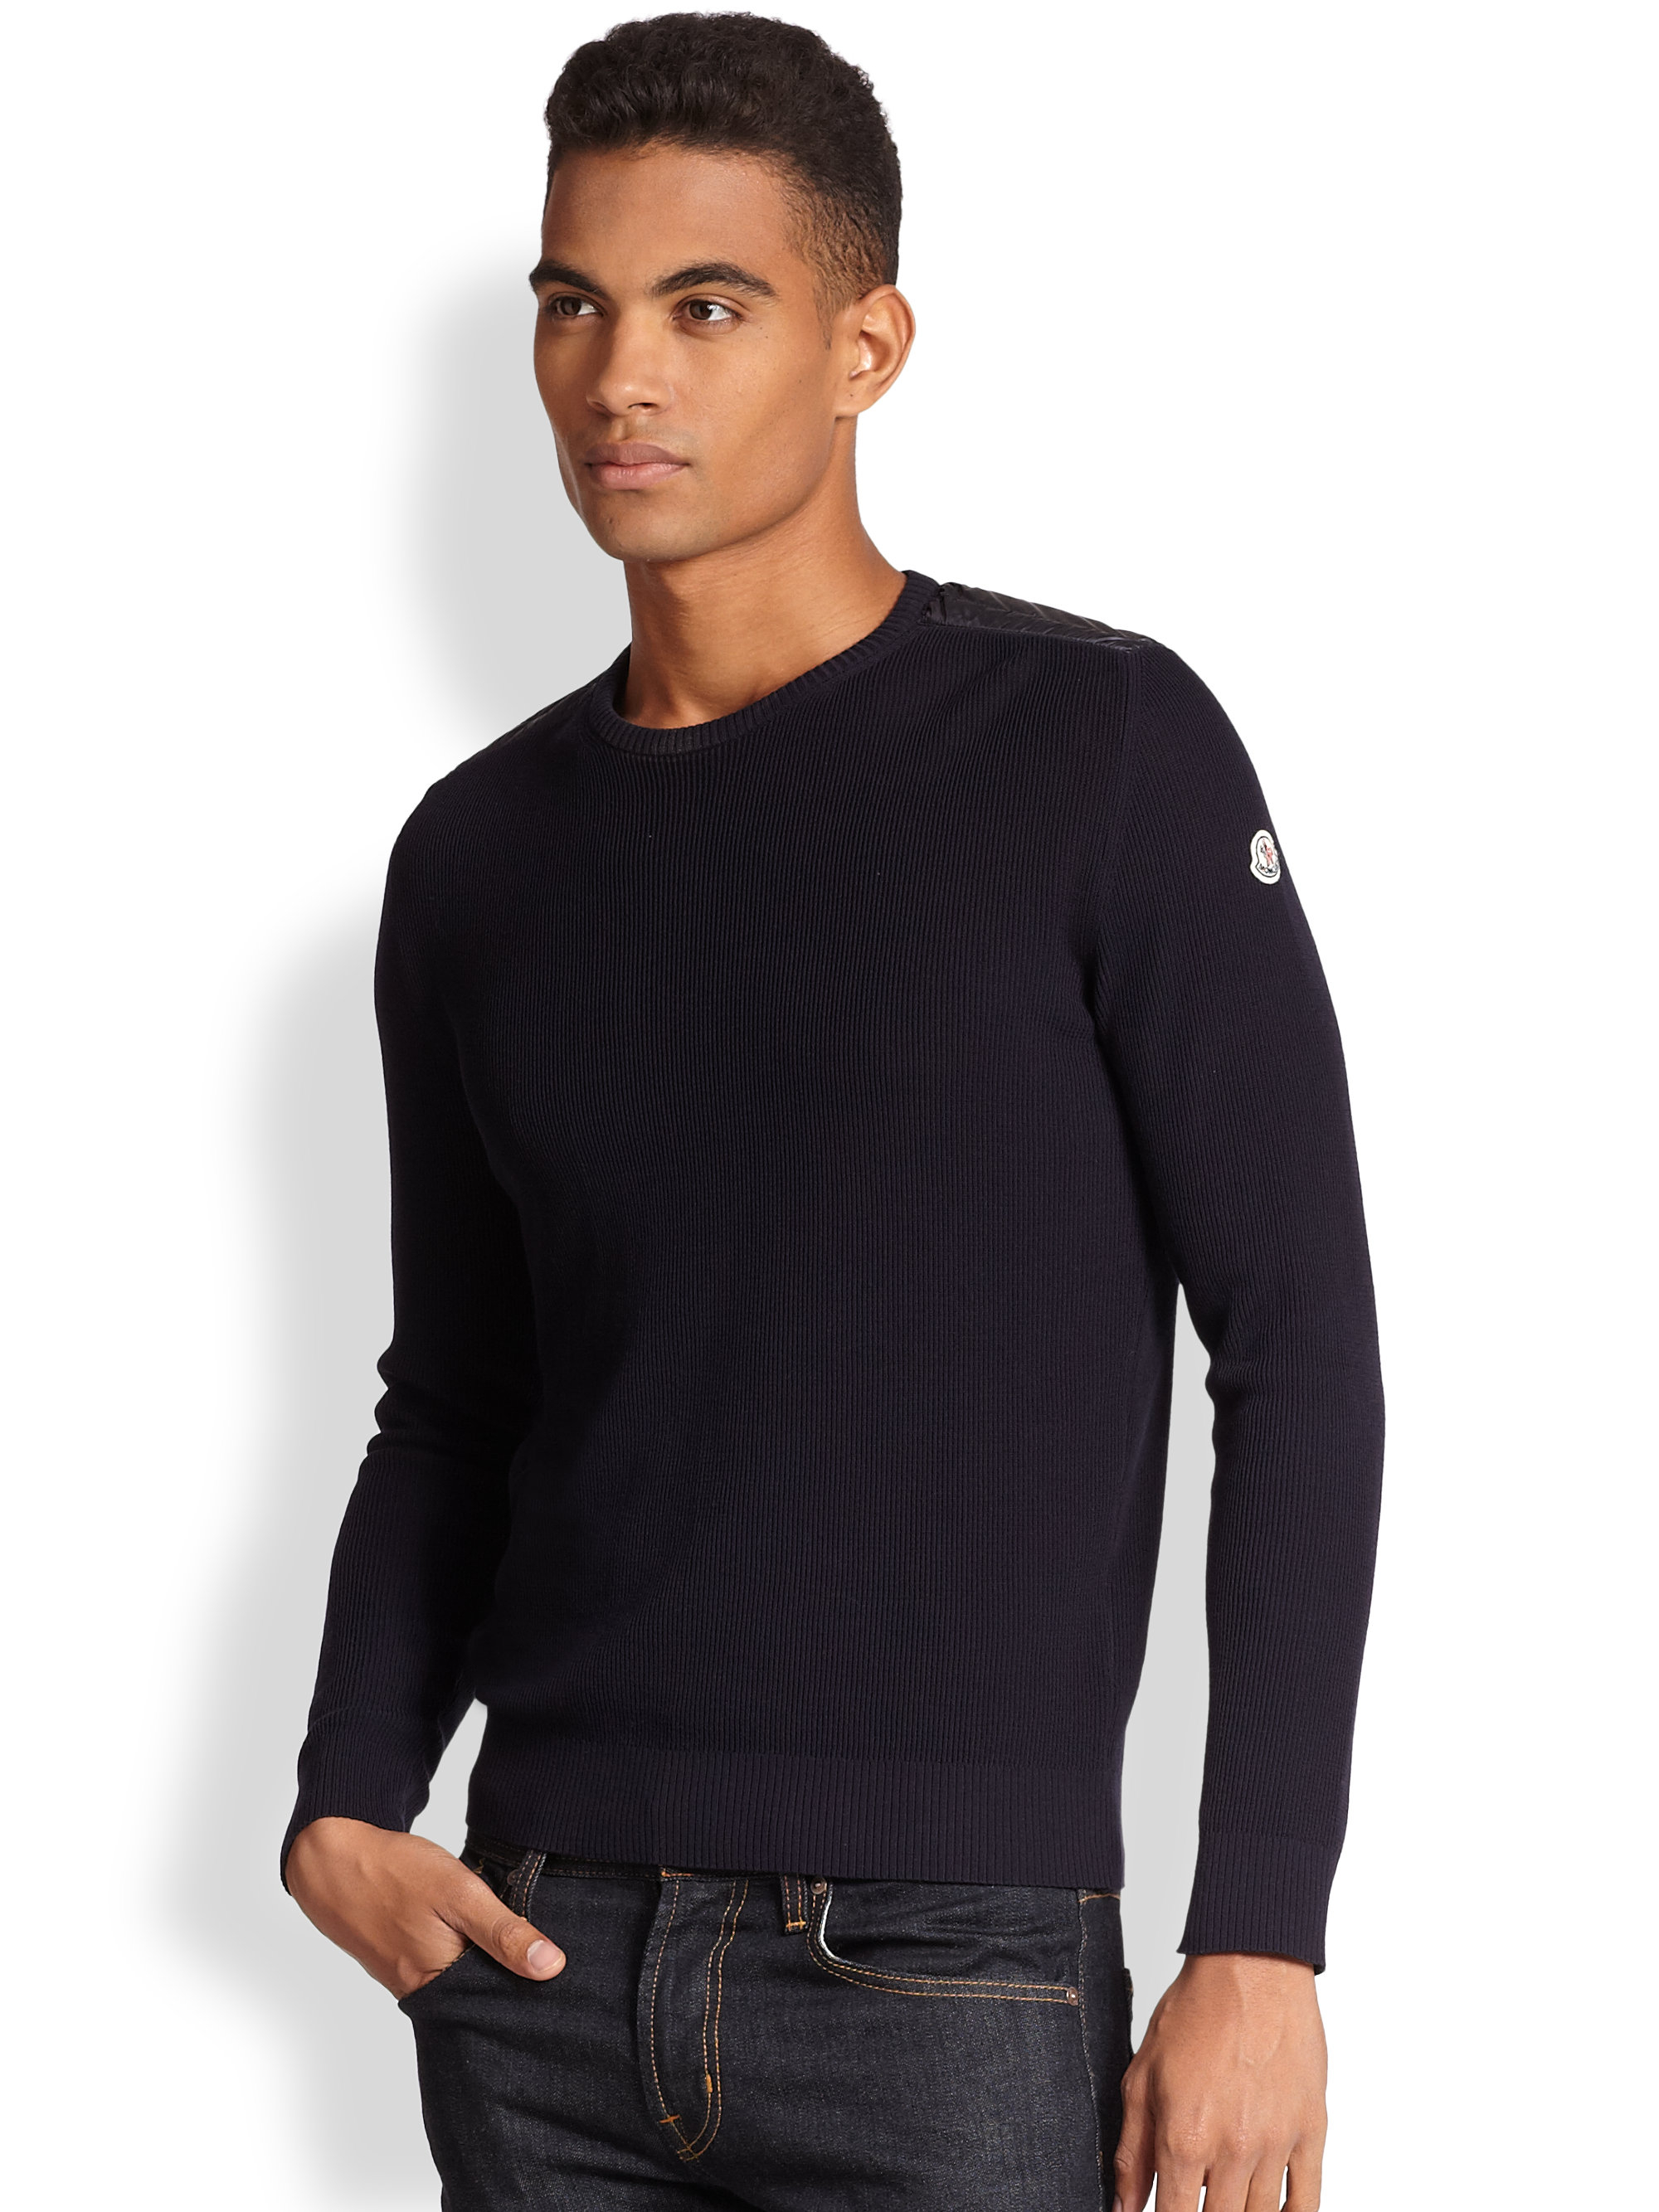 Moncler Cotton Crewneck Sweater in Blue for Men - Lyst